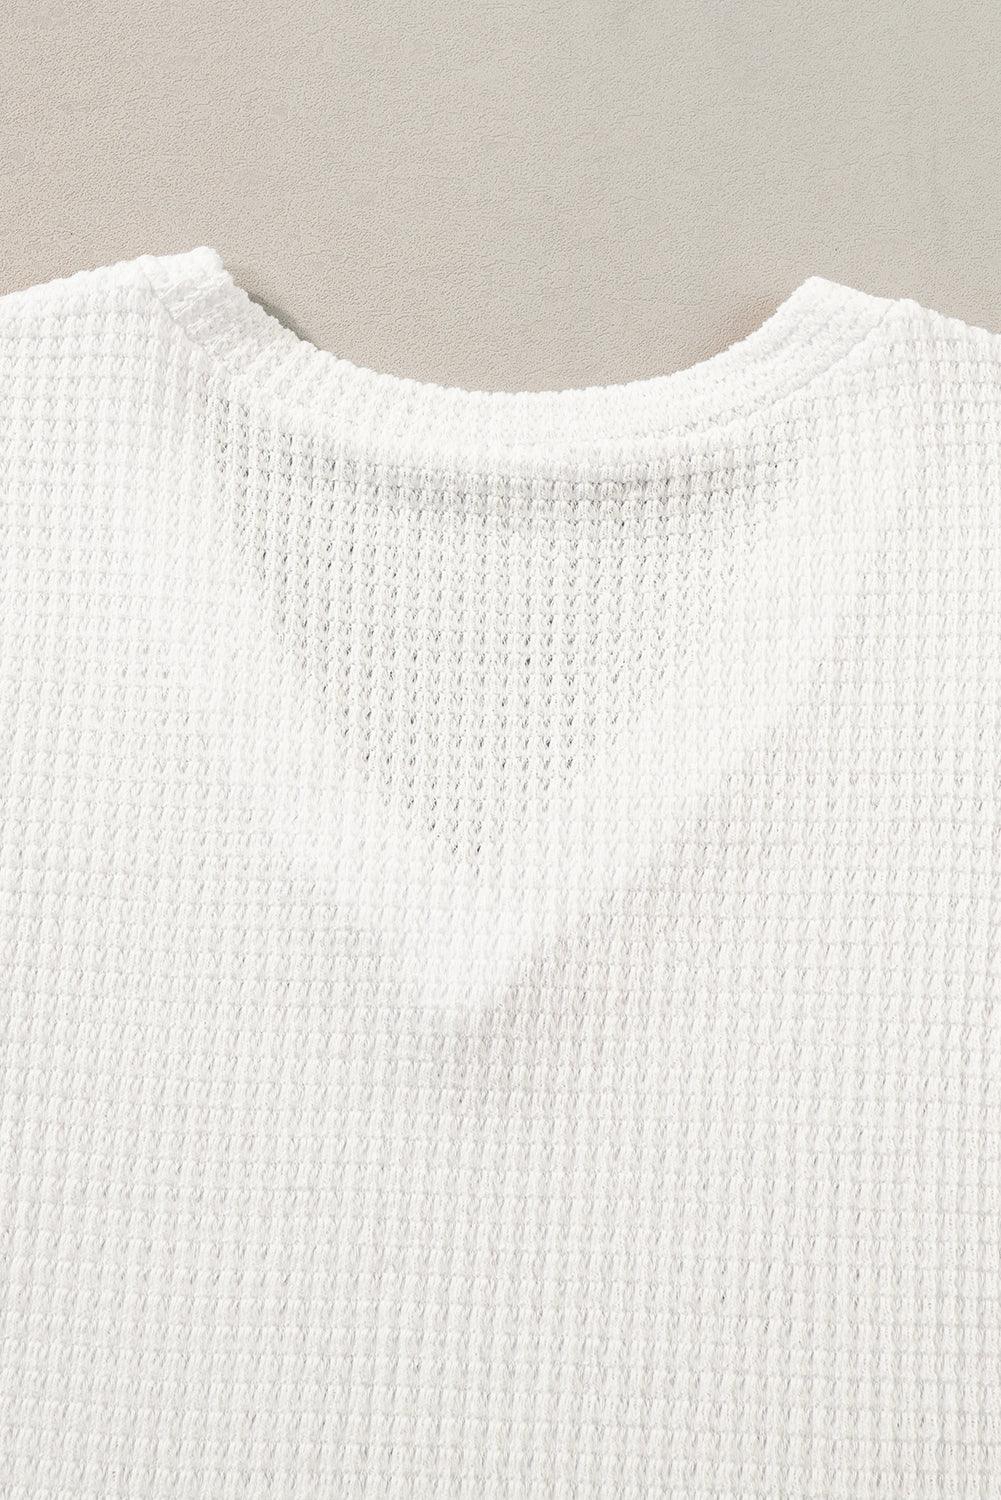 White V Neck Petal Sleeve Waffle Knit T-Shirt - L & M Kee, LLC